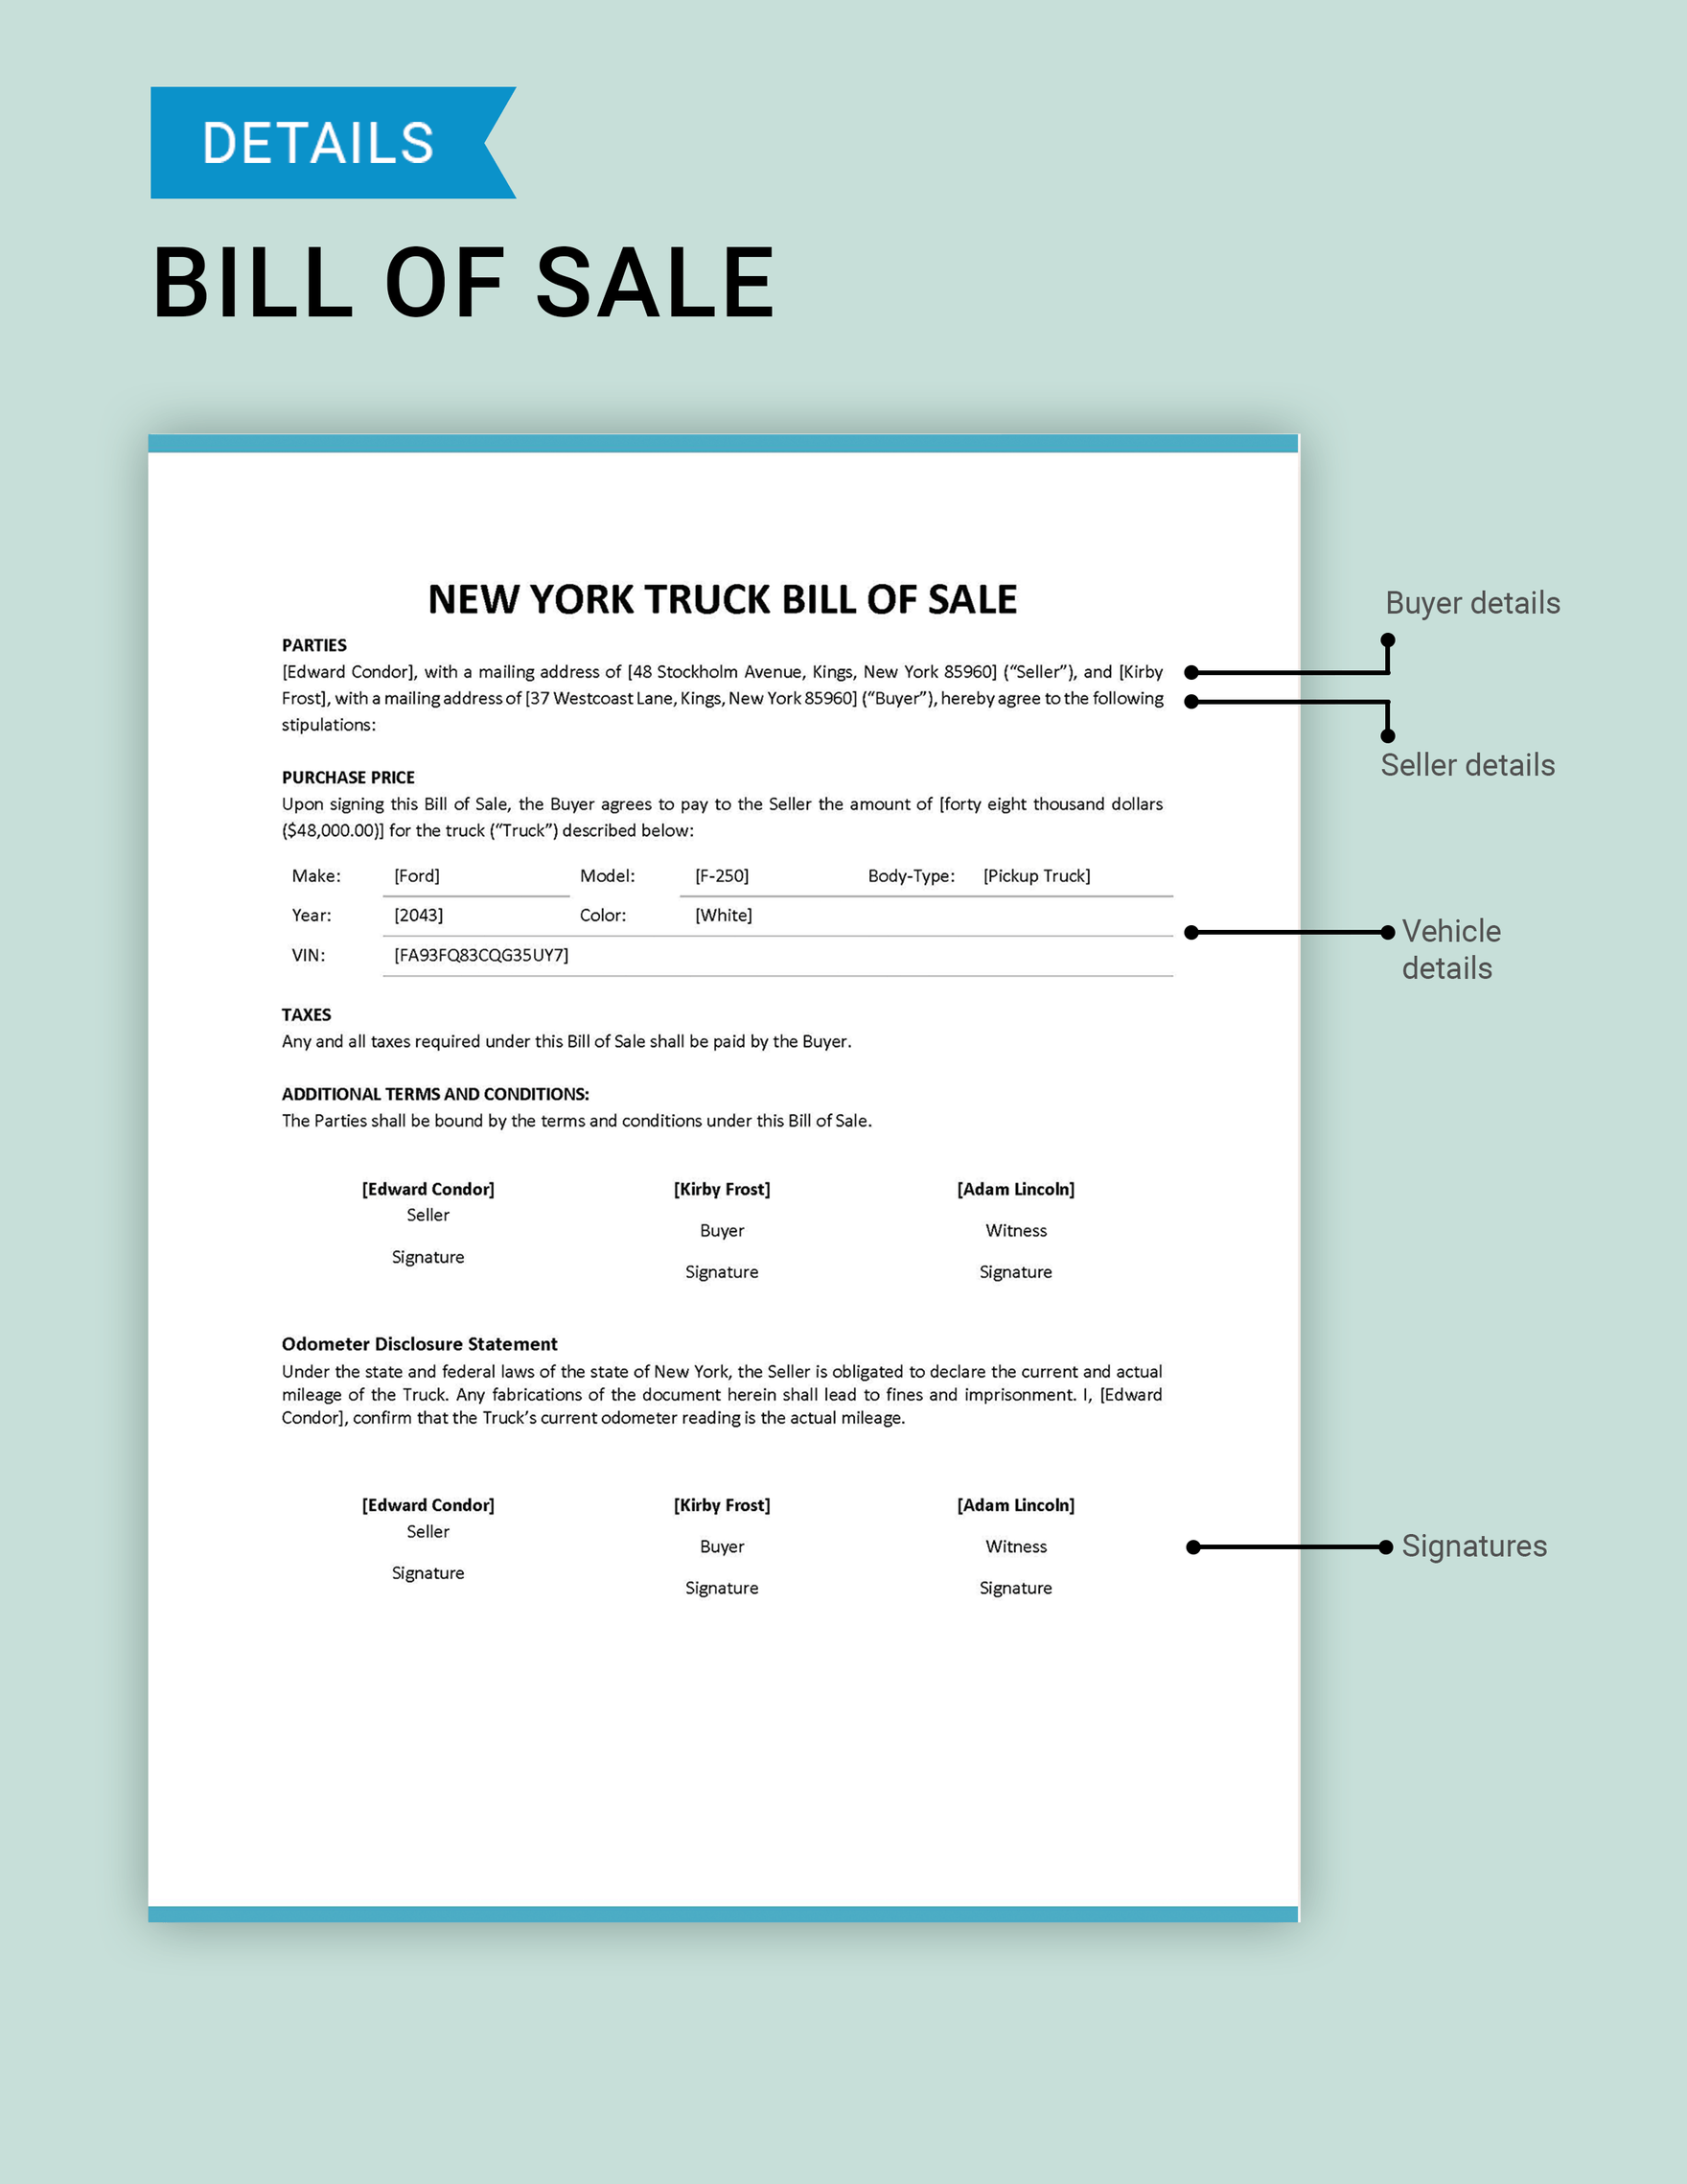 New York Truck Bill of Sale Template